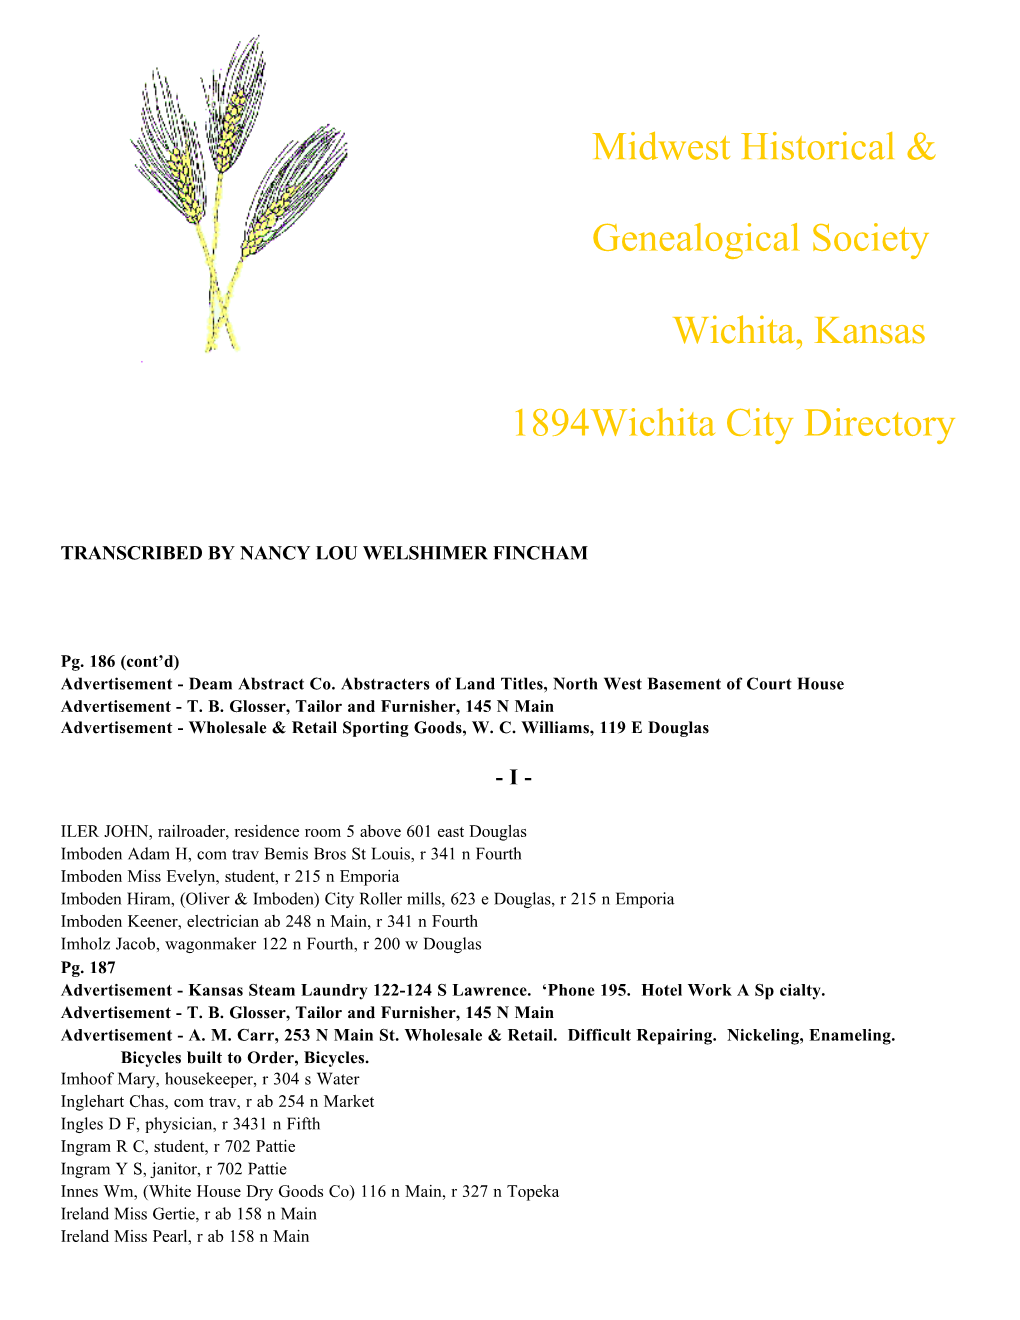 Midwest Historical & Genealogical Society Wichita, Kansas